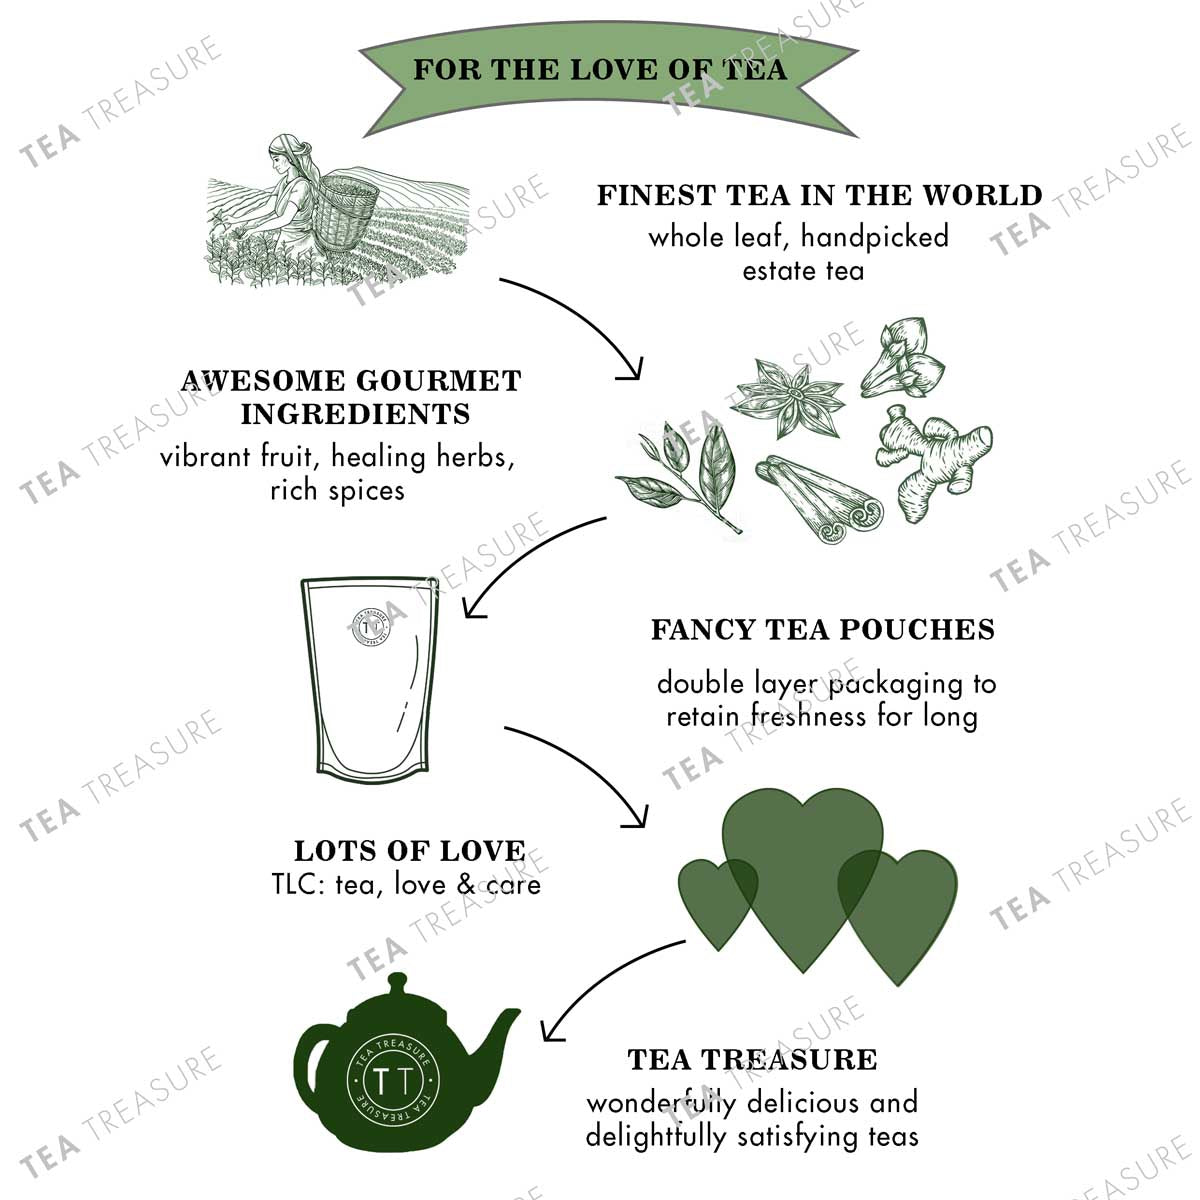 Super Tulsi Green Tea - Sorich